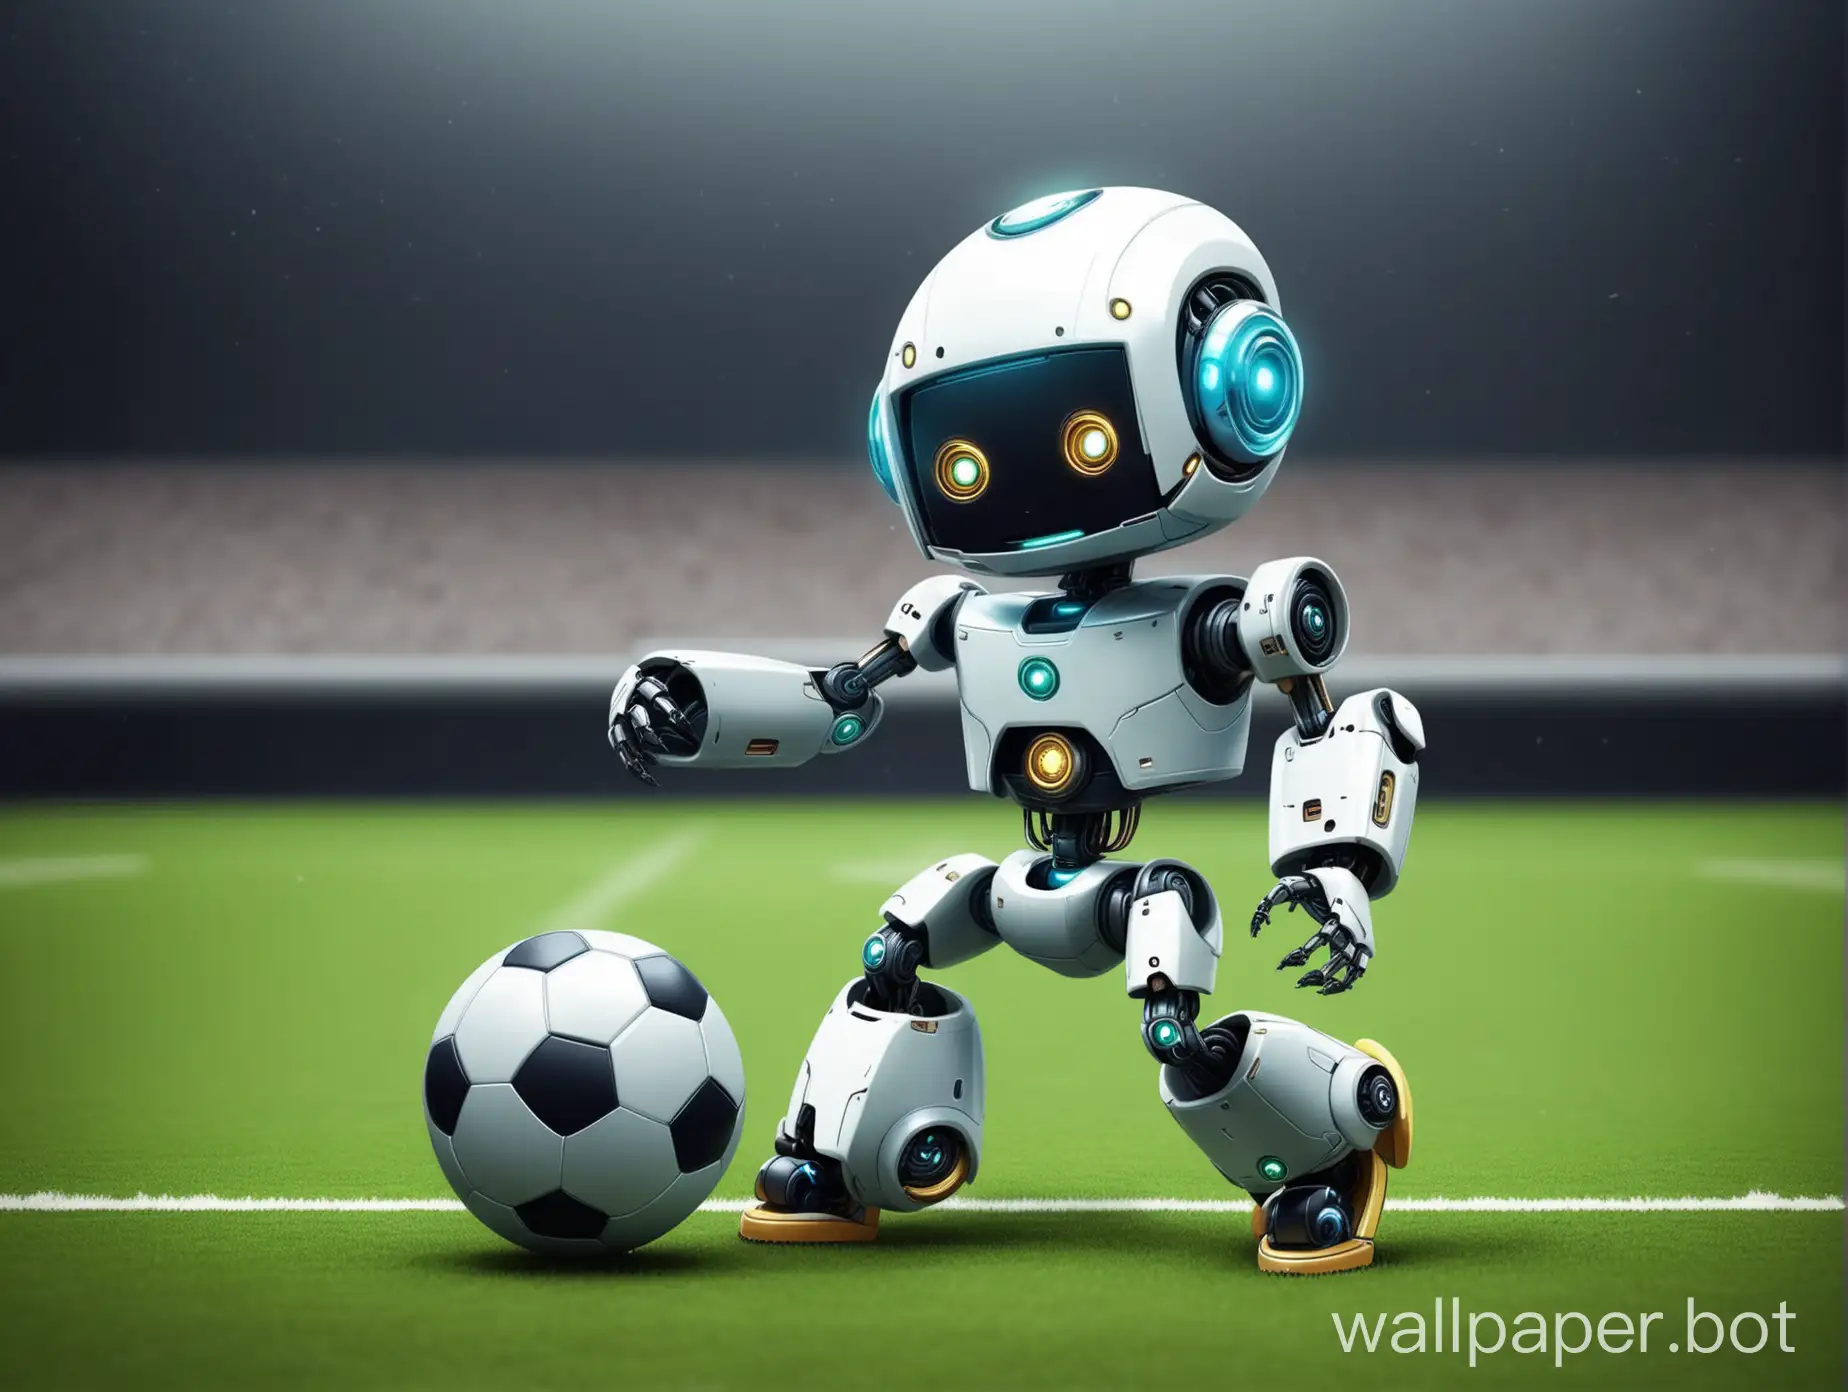 Adorable-Miniature-Robot-Playing-Soccer